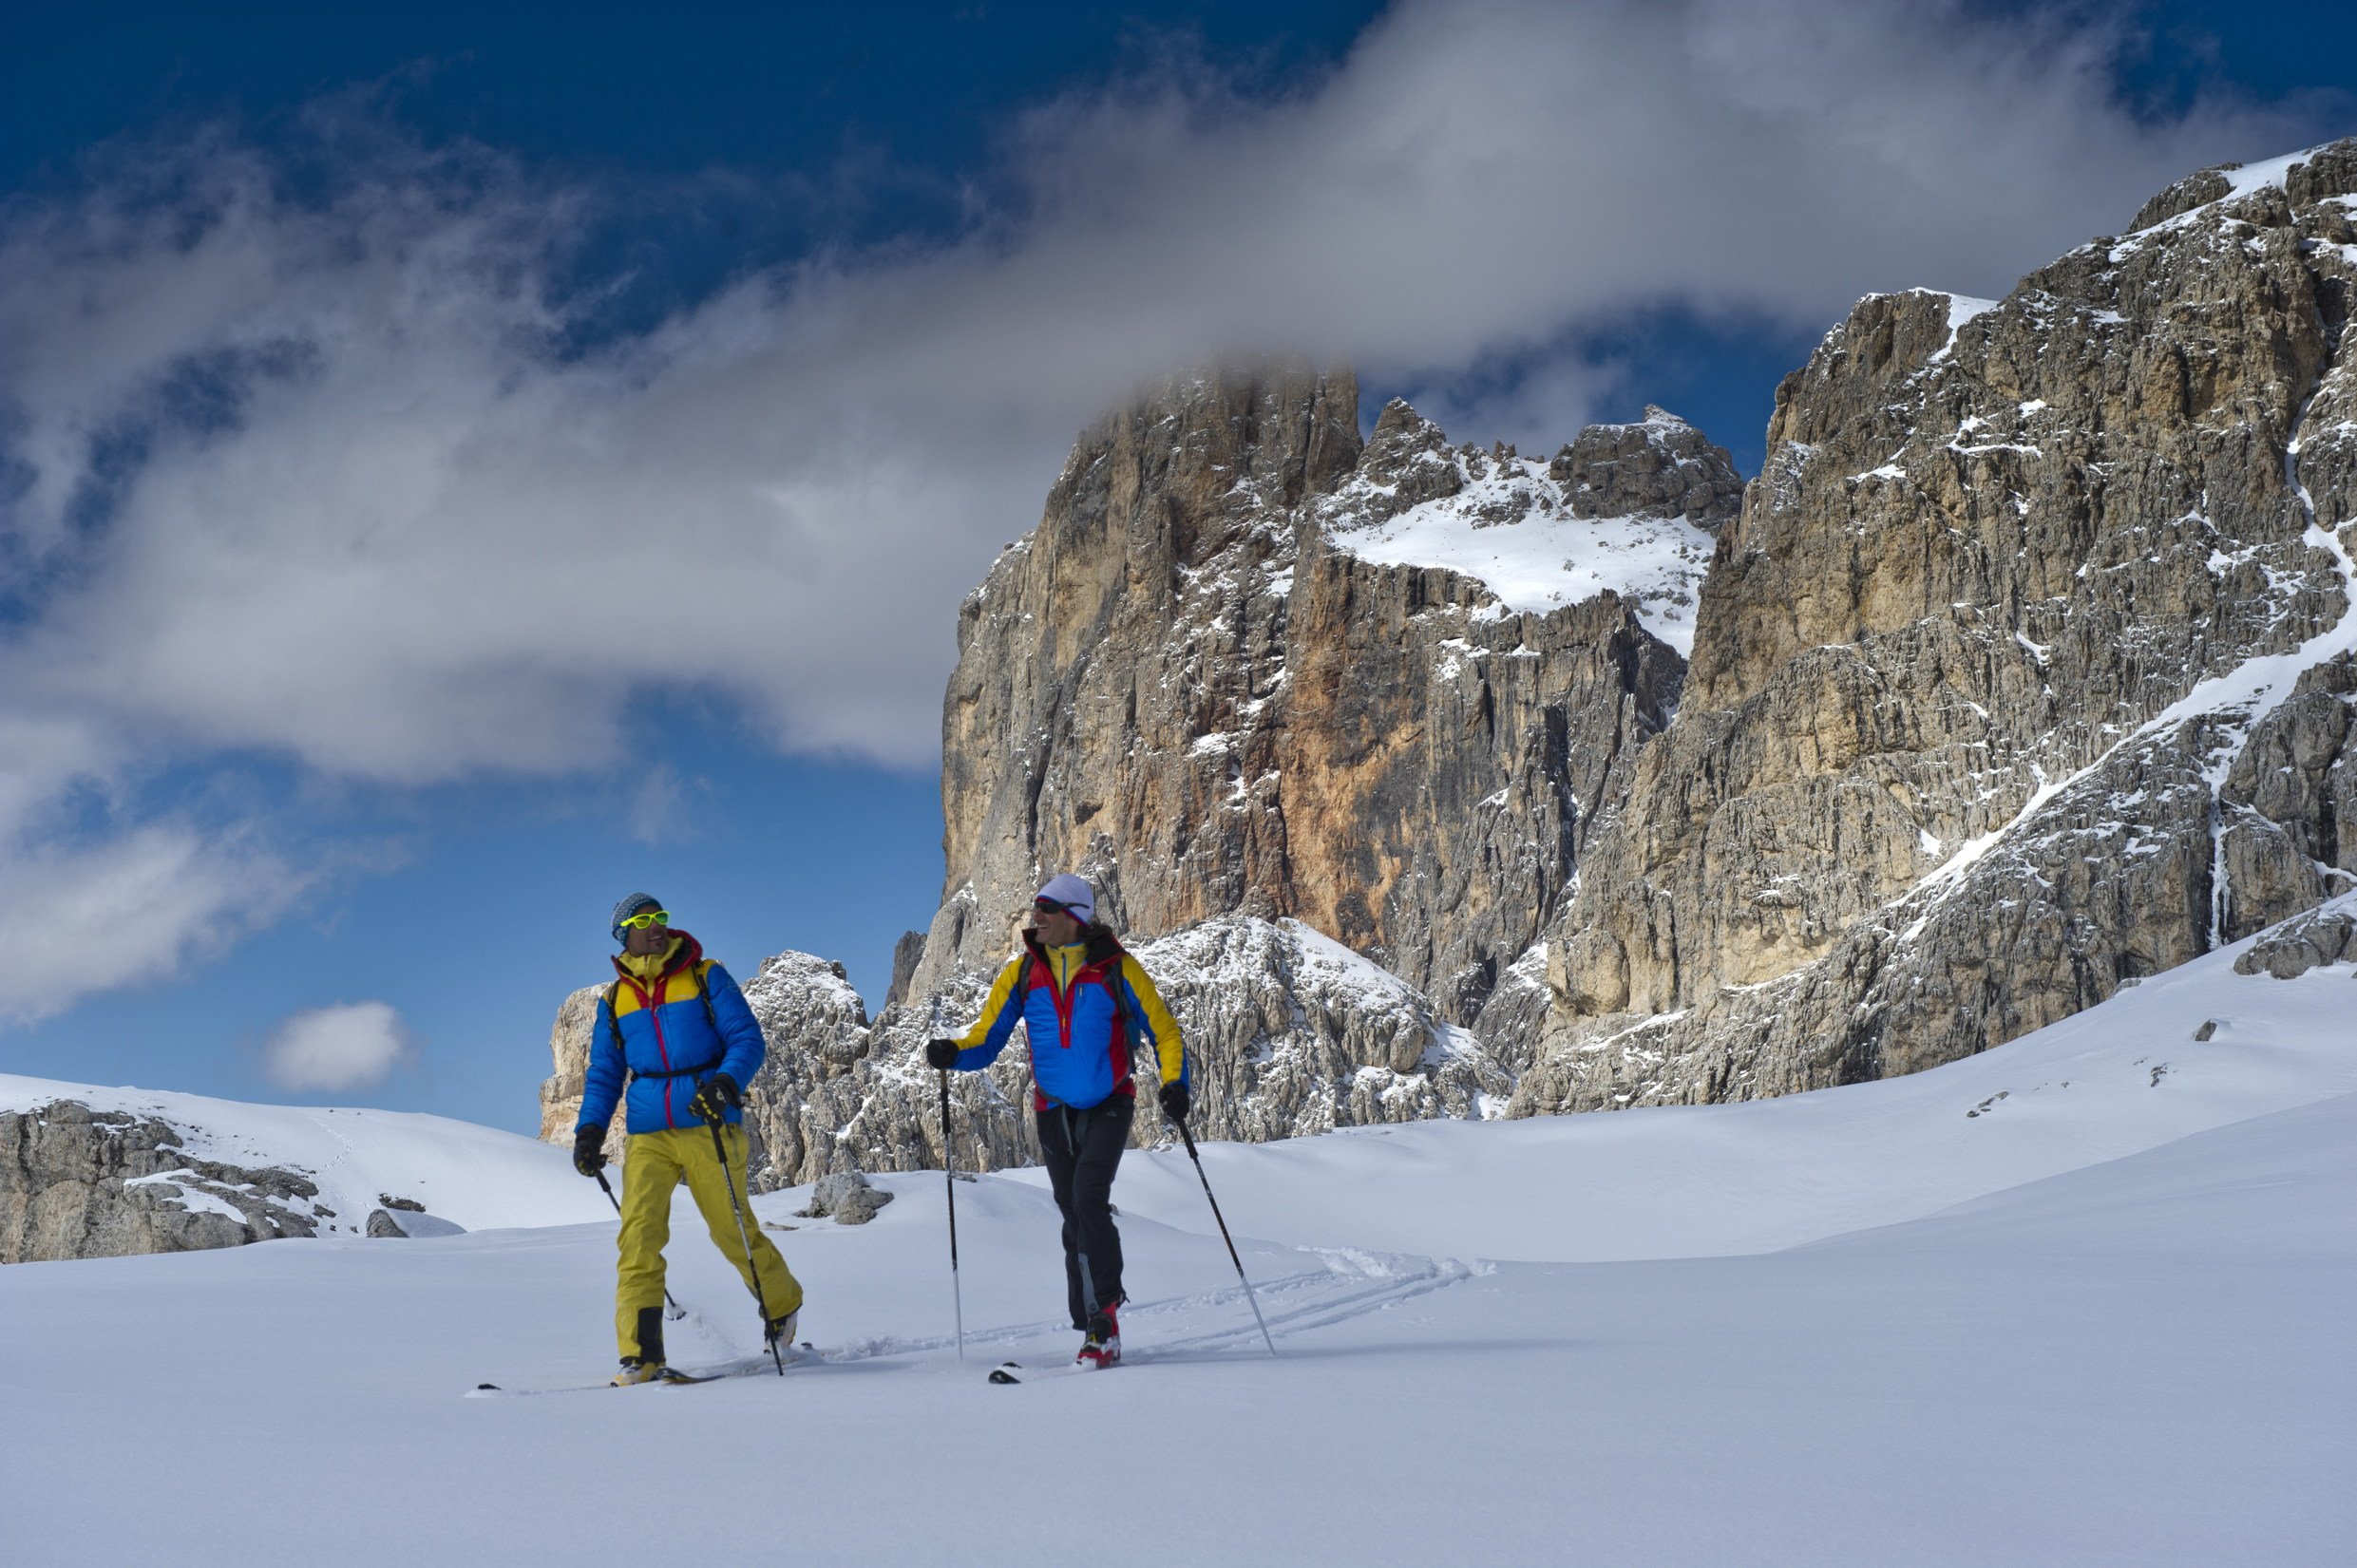 La Sportiva – Skitouren: Von Race bis Freeride – La Sportiva erweitert sein Skitouren-Sortiment